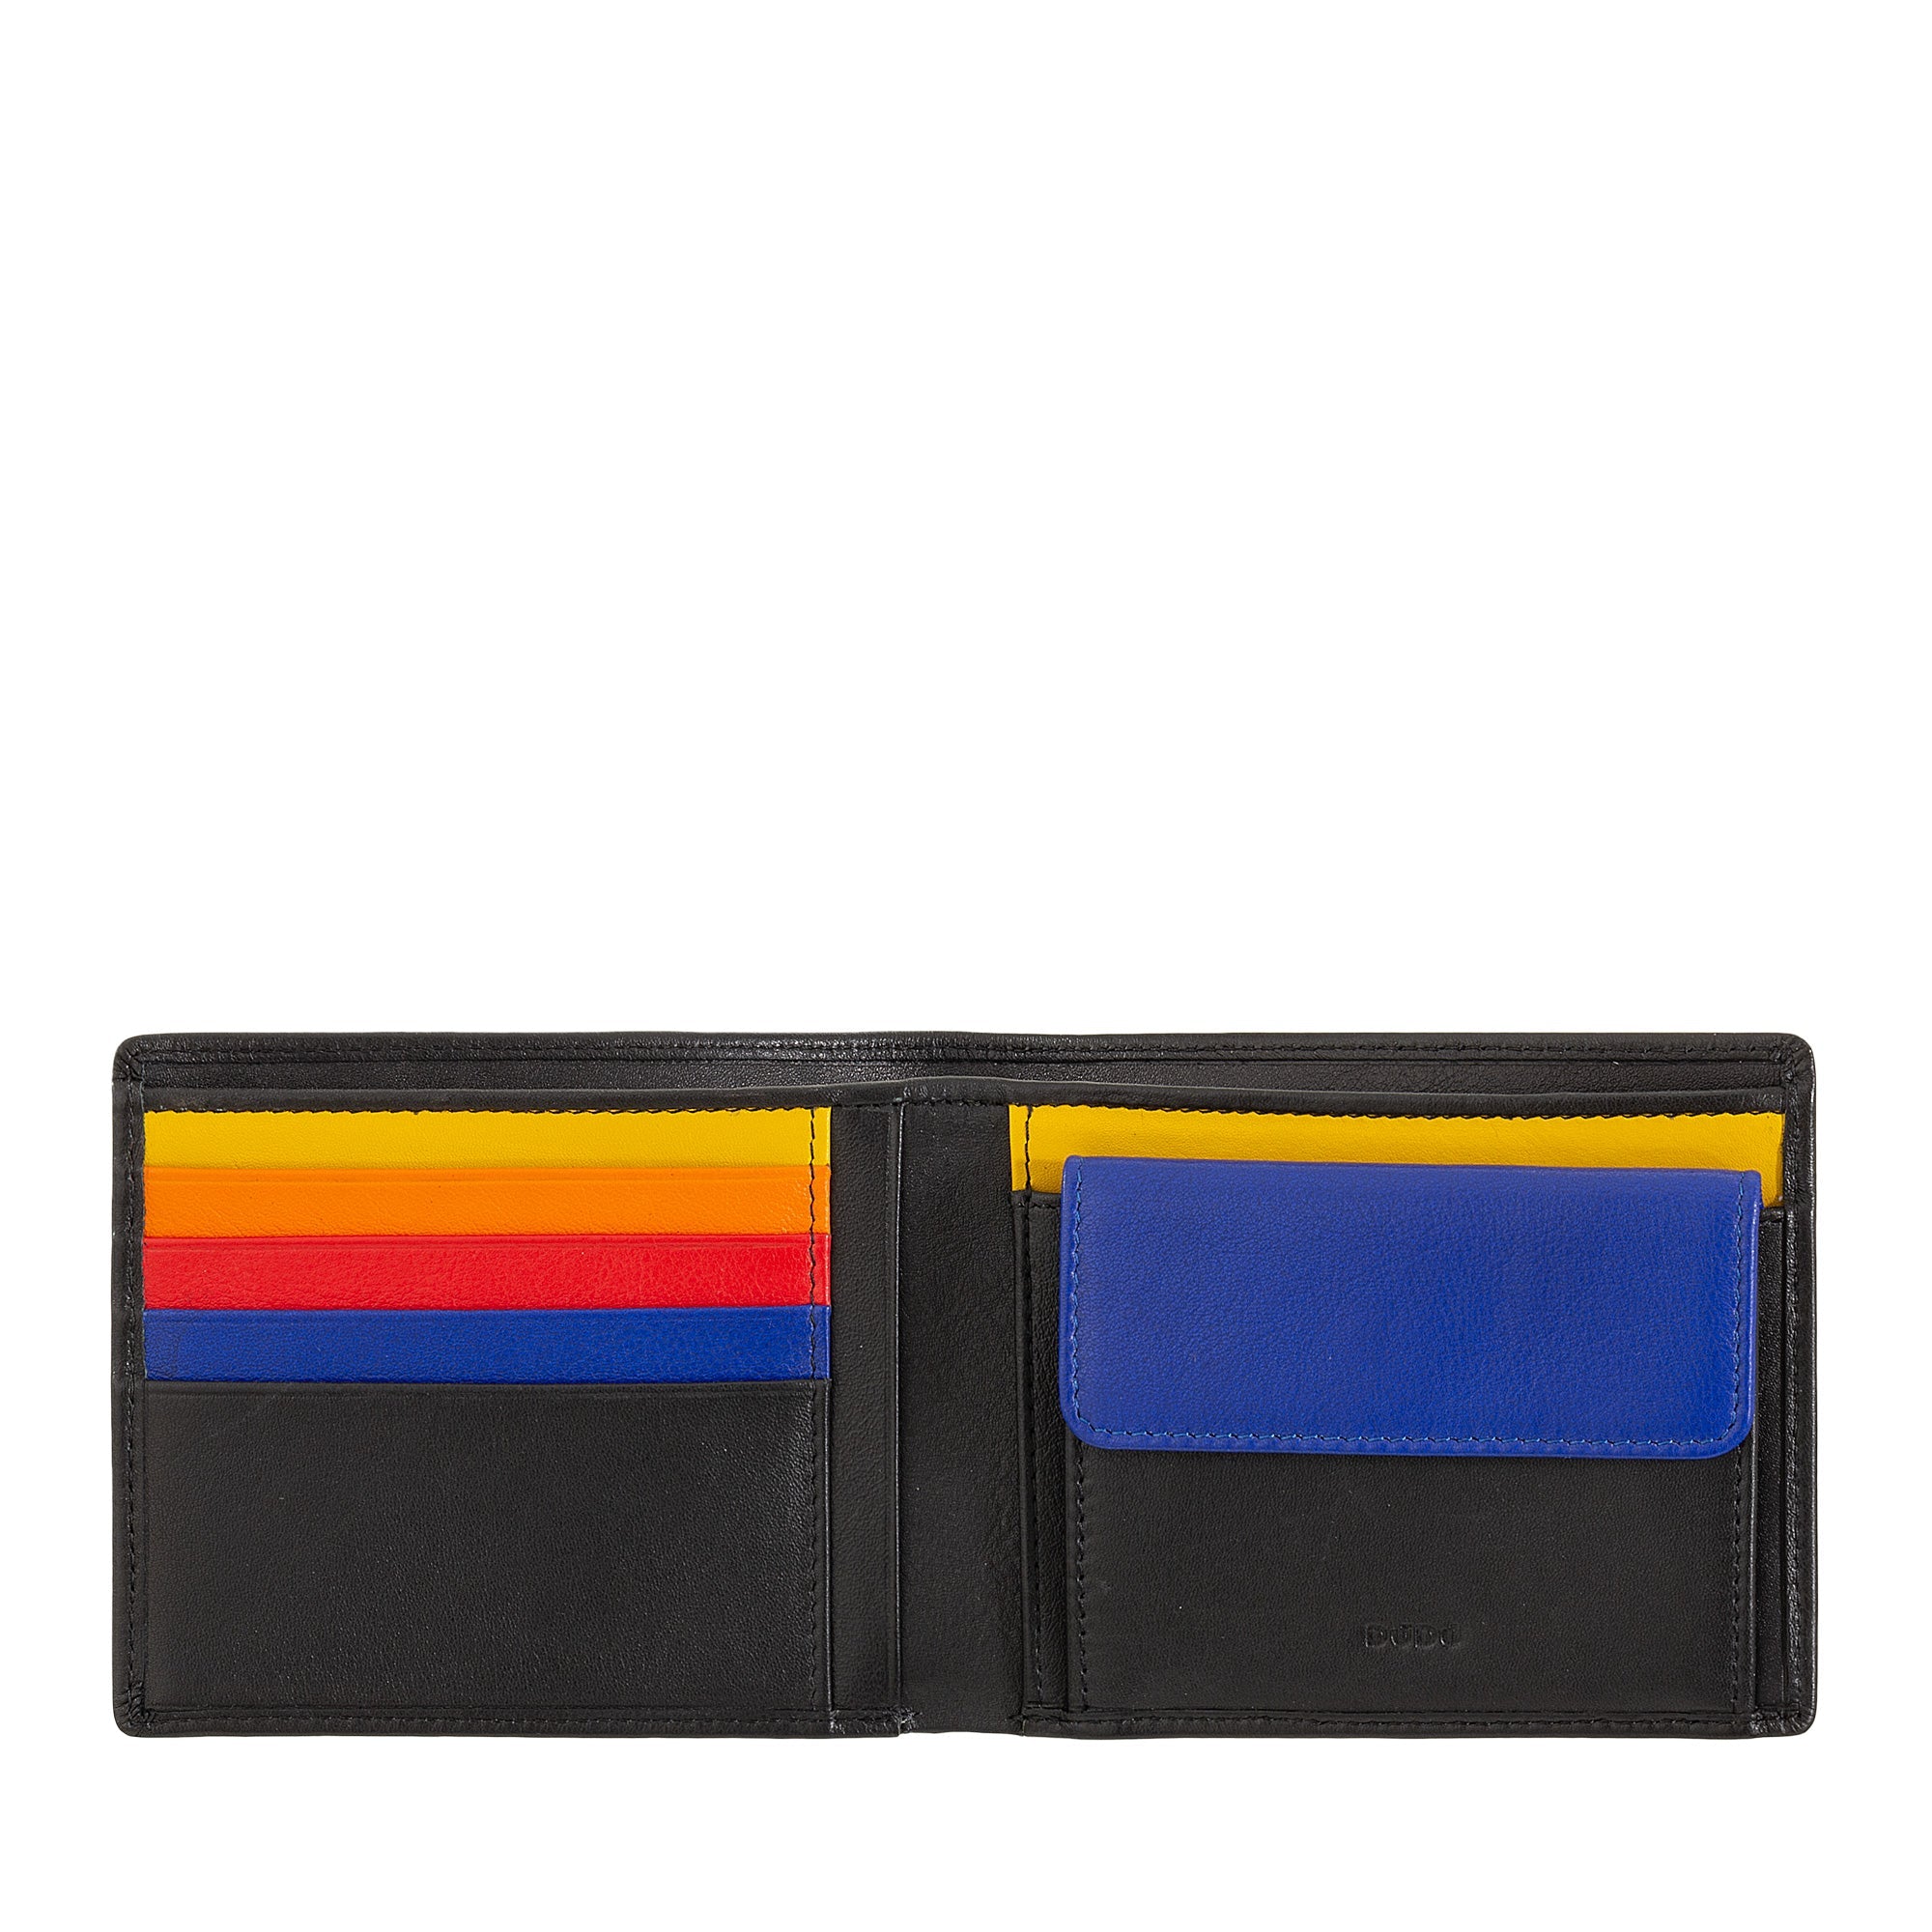 DuDu ITACA Multicolor Leather Wallet - Men's Soft Calfskin